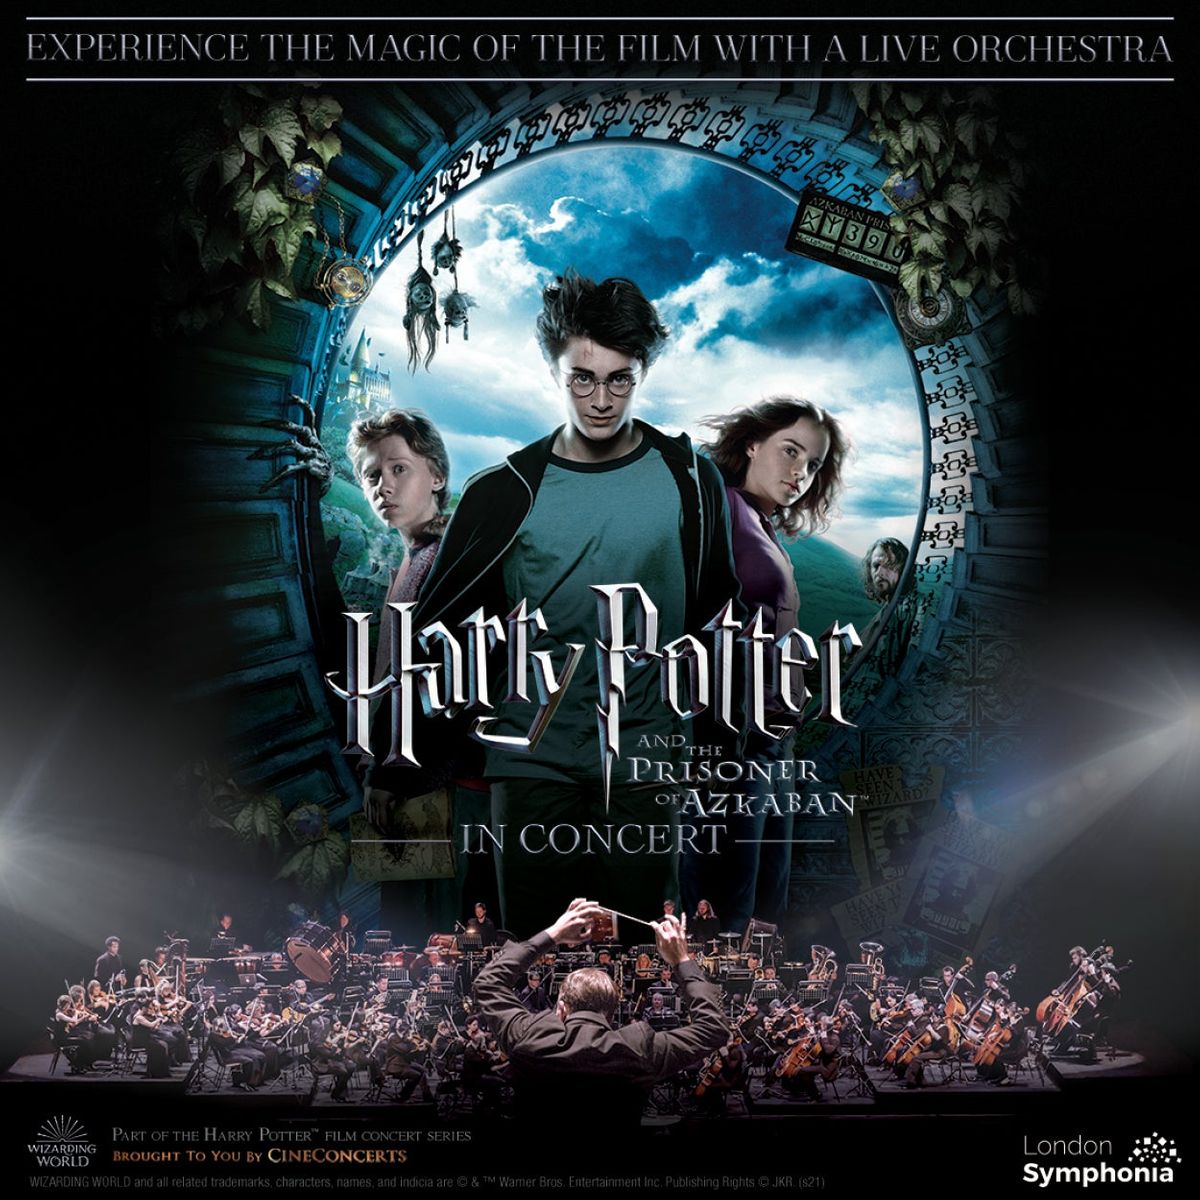 Harry Potter and the Prisoner of Azkaban - In Concert